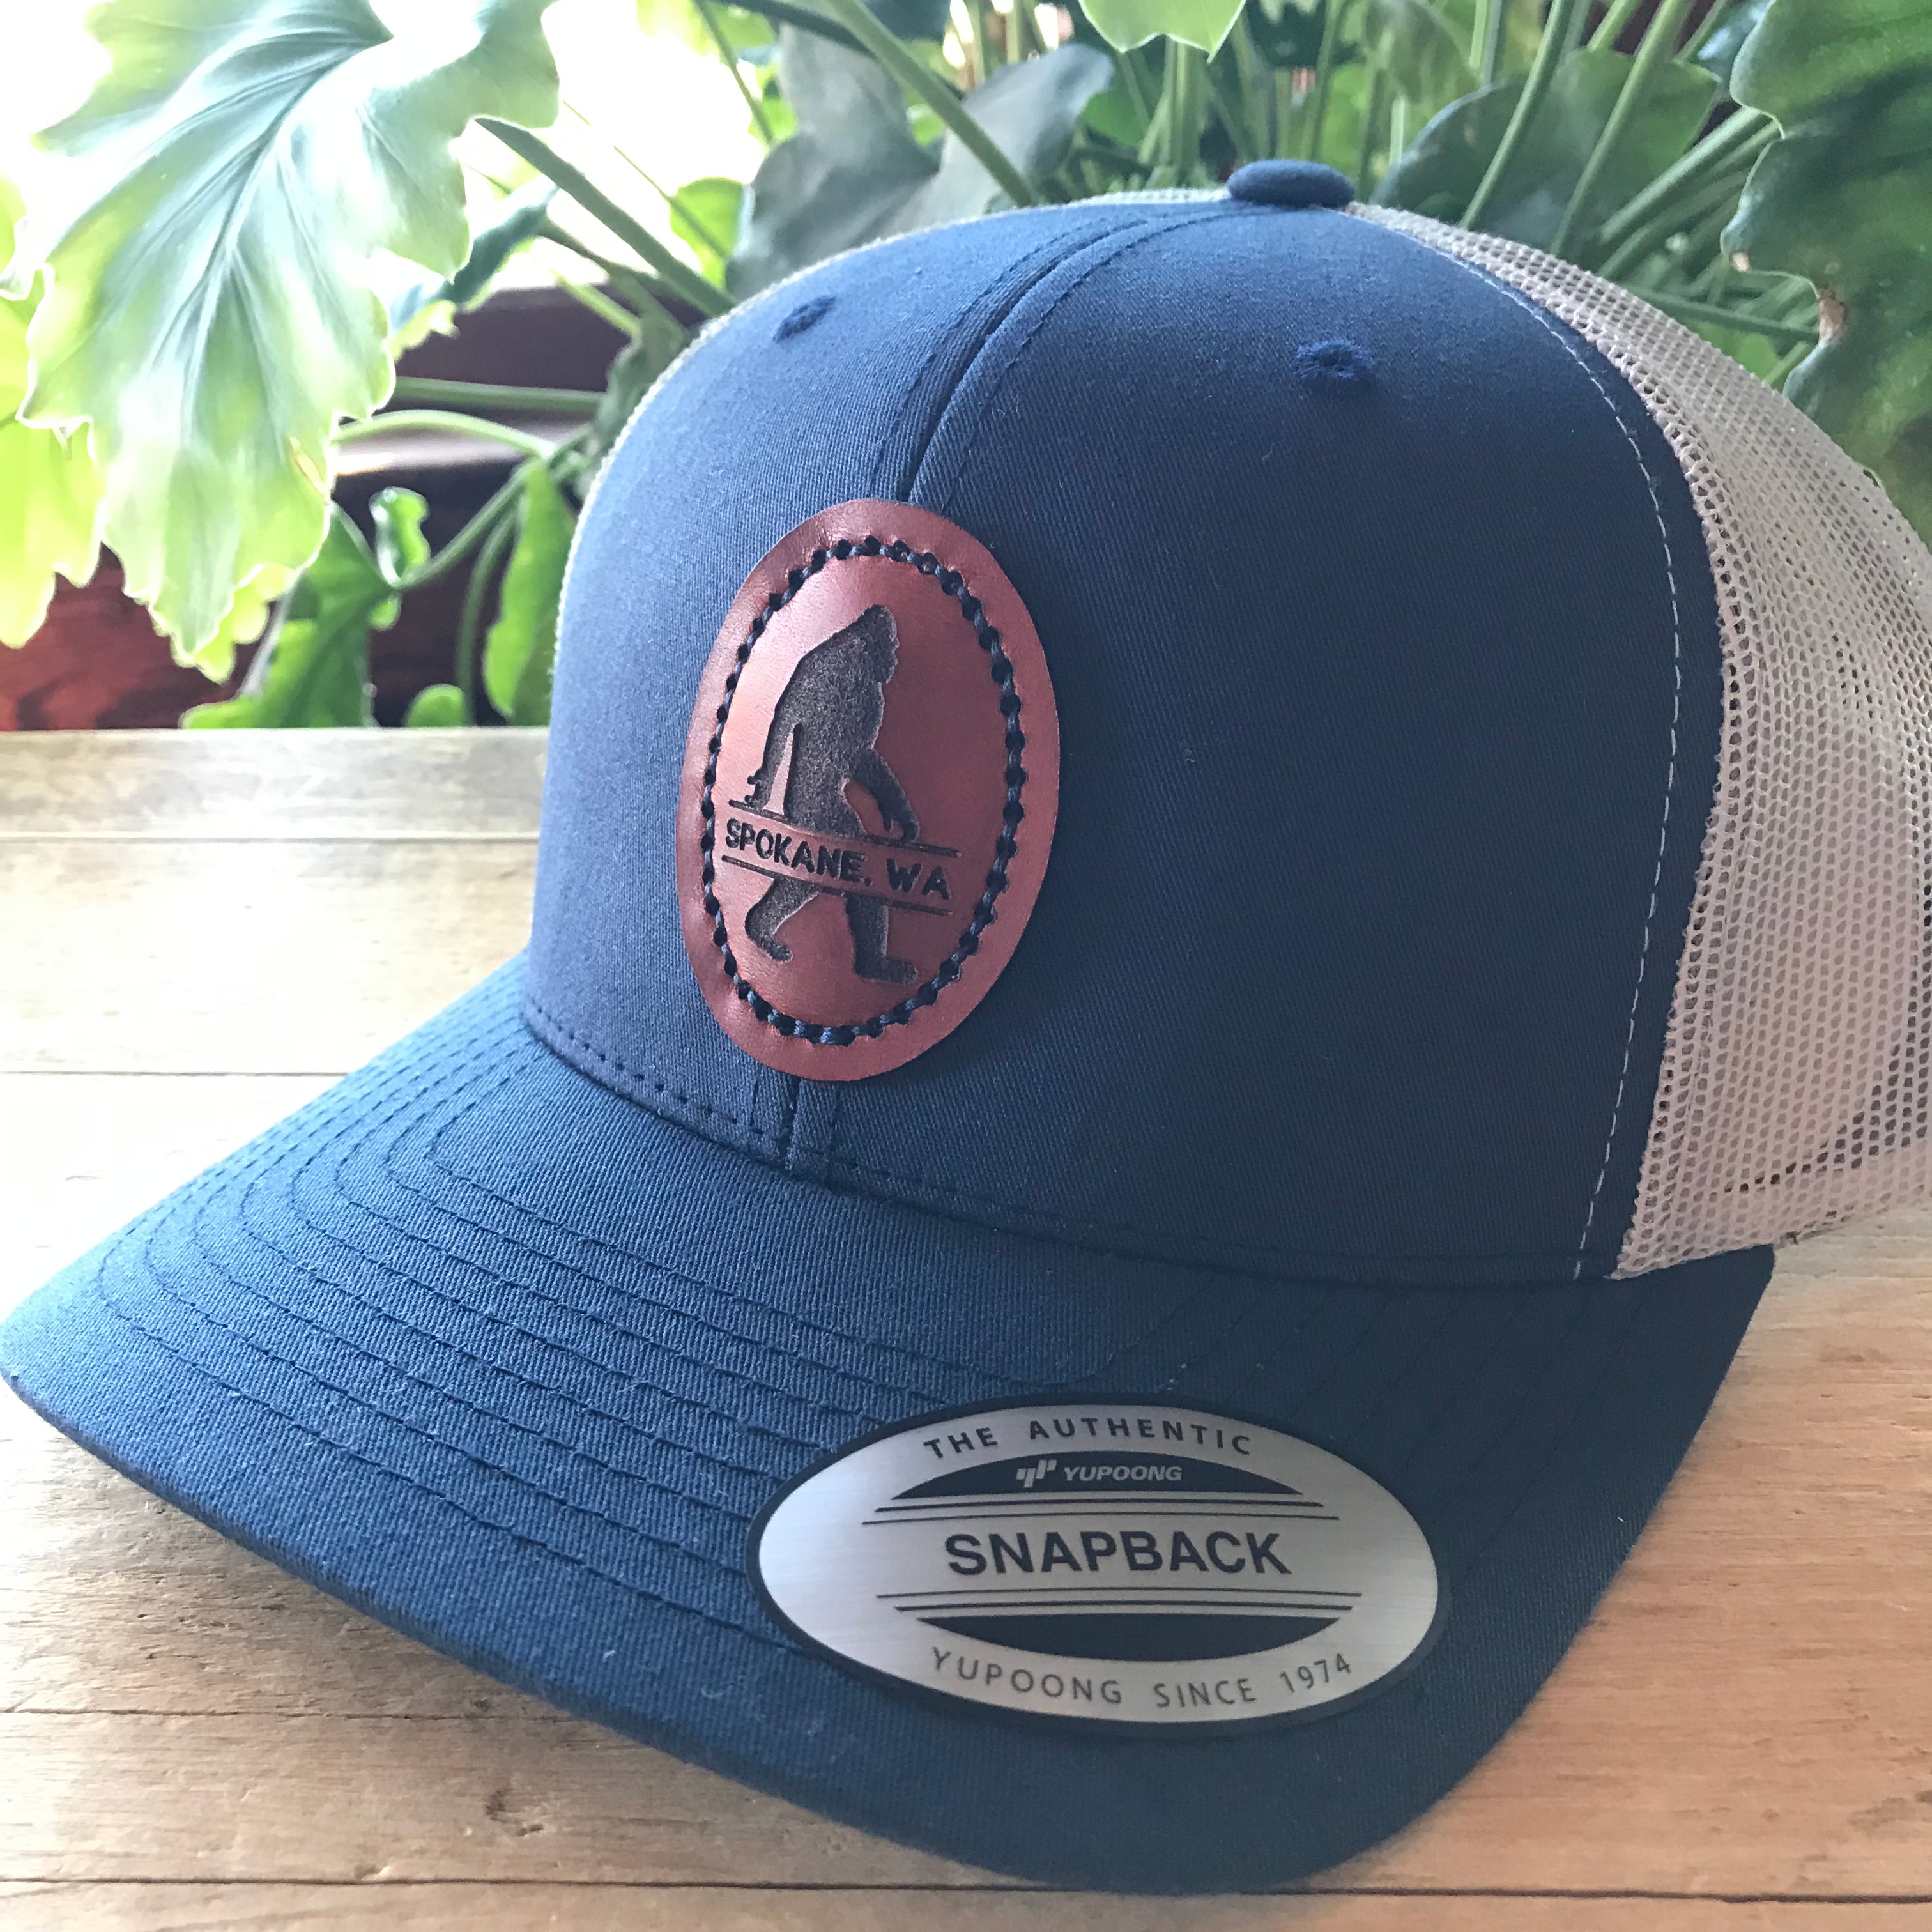 Spokane, WA Bigfoot Retro Trucker Hat